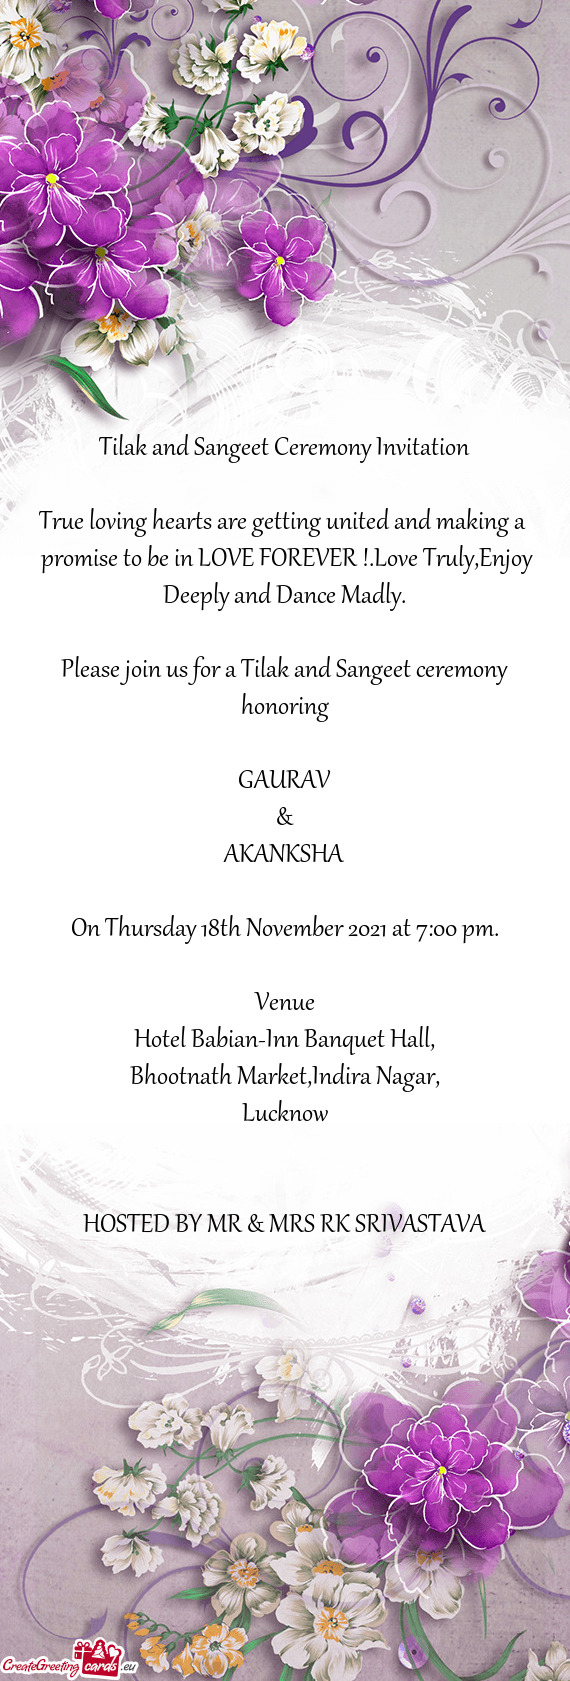 Tilak and Sangeet Ceremony Invitation